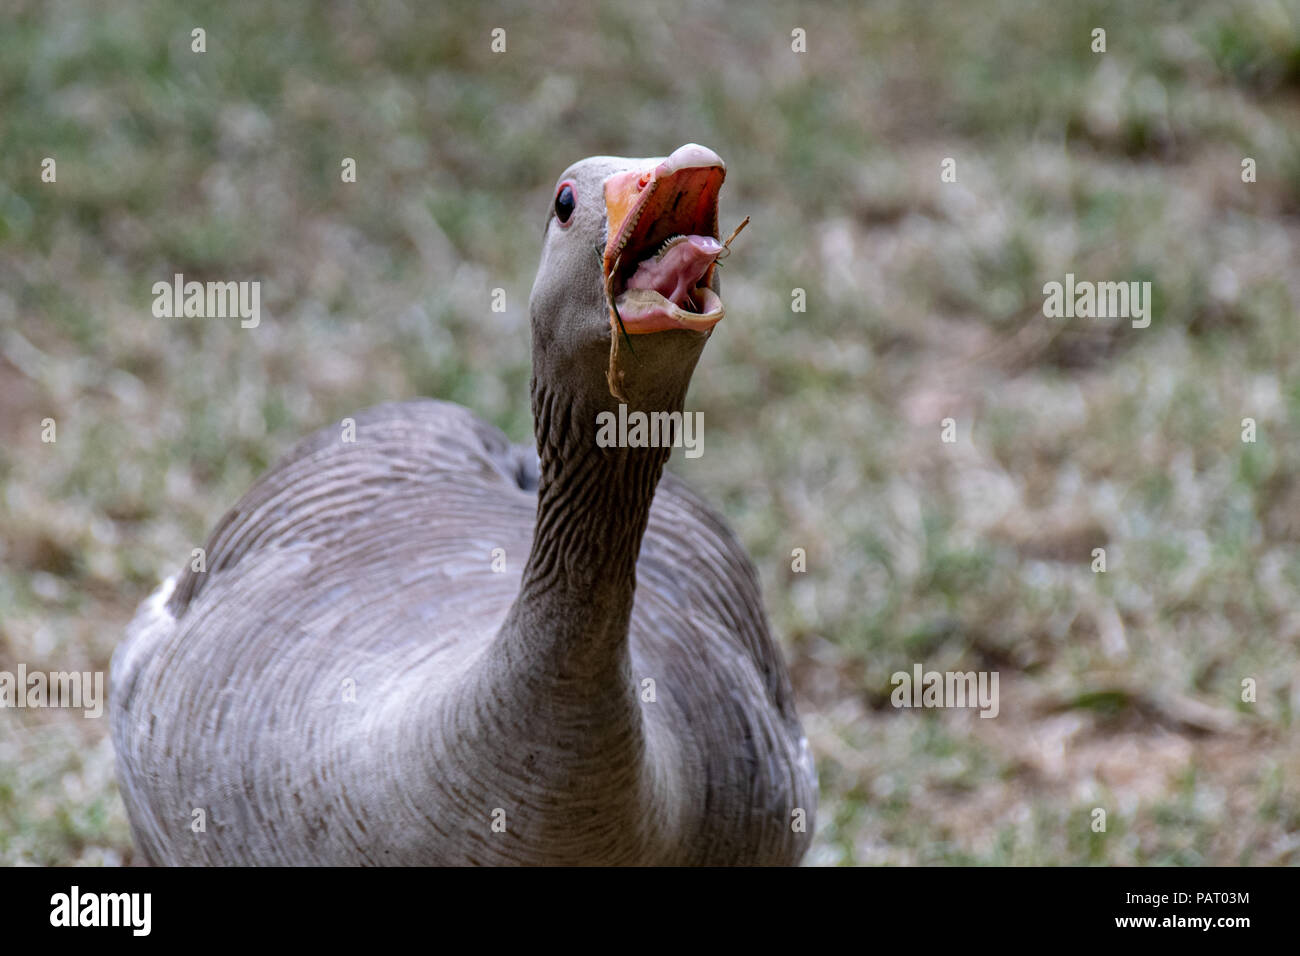 Angry, hissing Greylag goose protecting flock of geese Hertfordshire, UK Stock Photo